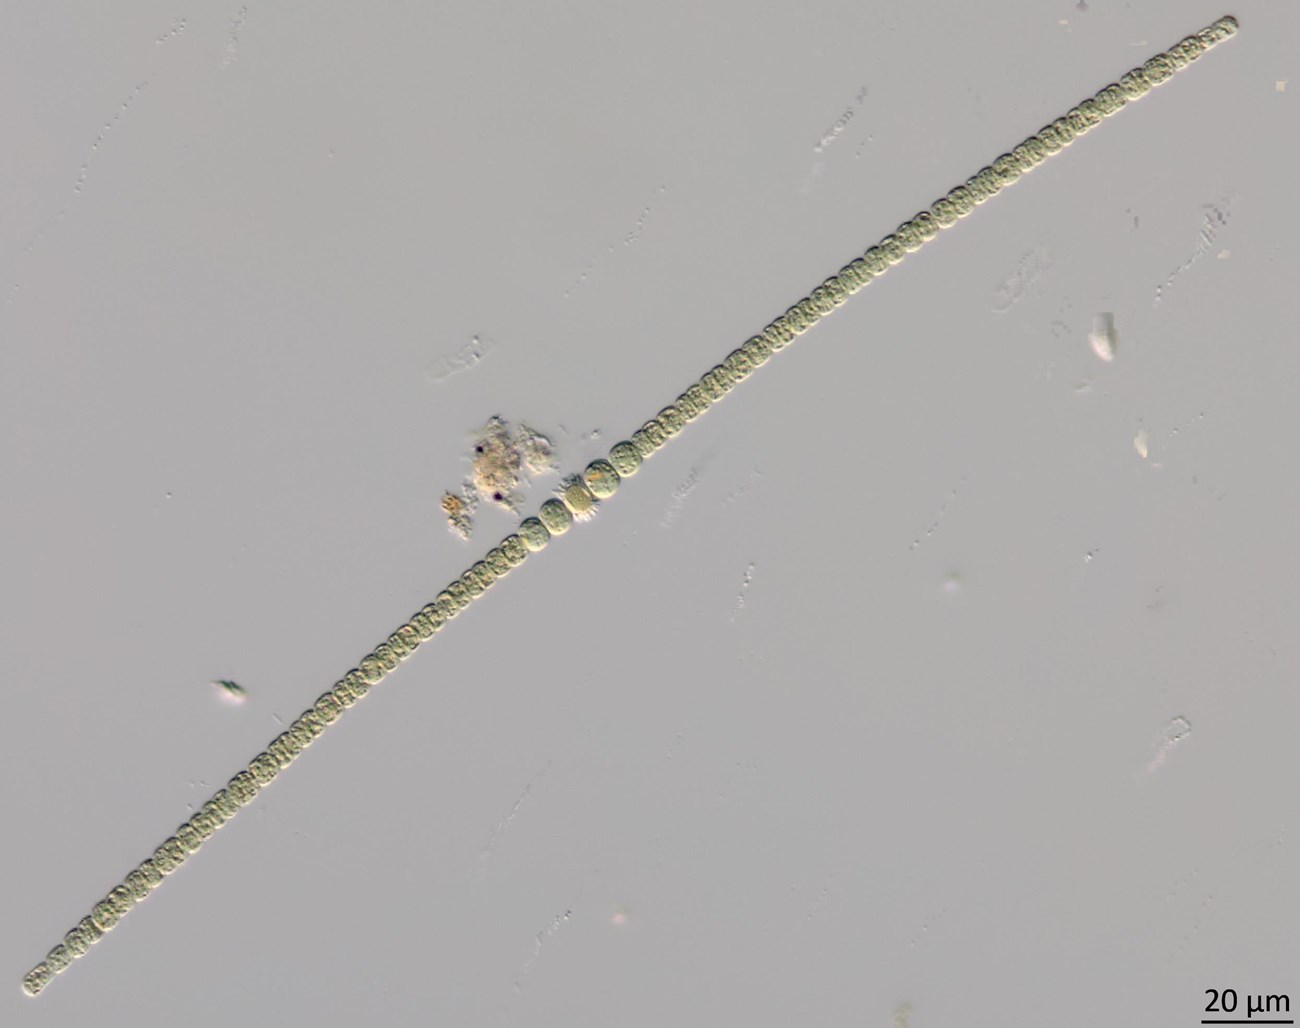 Microscope photo of a long, slender cyanobacterium.